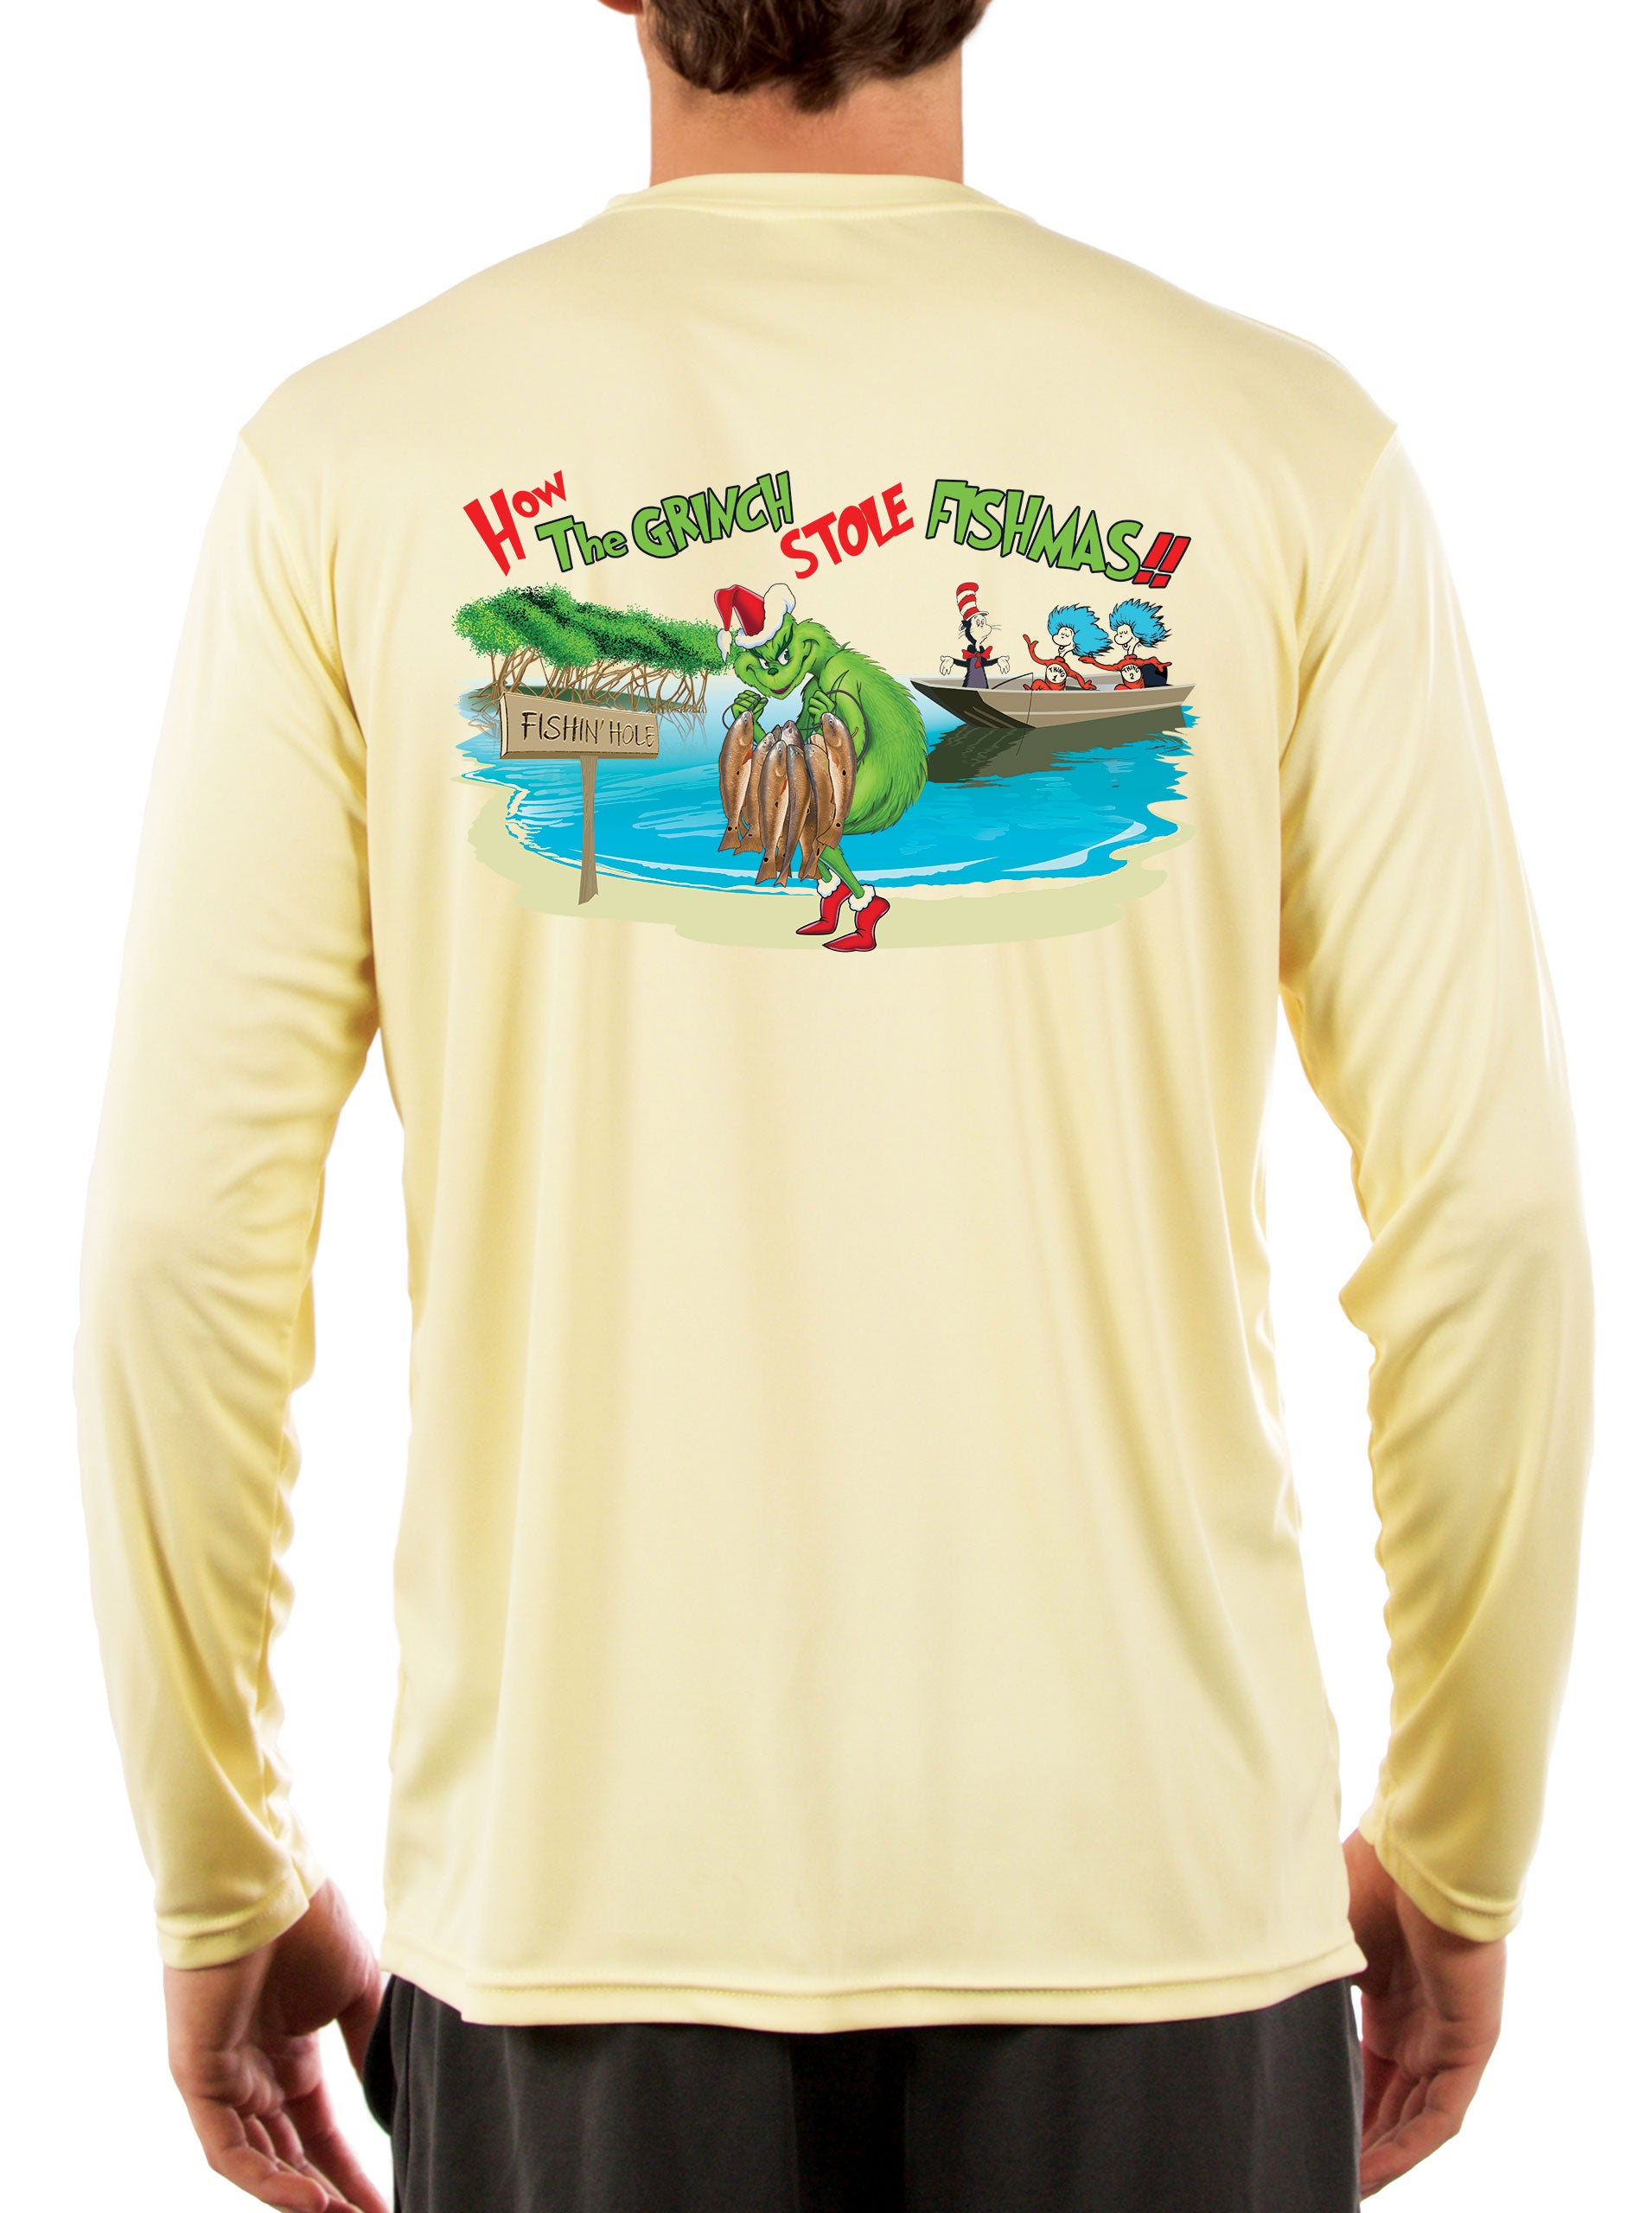 The Grinch Who Stole Christmas Fishmas Fishing Shirts by Skiff Life - Skiff Life